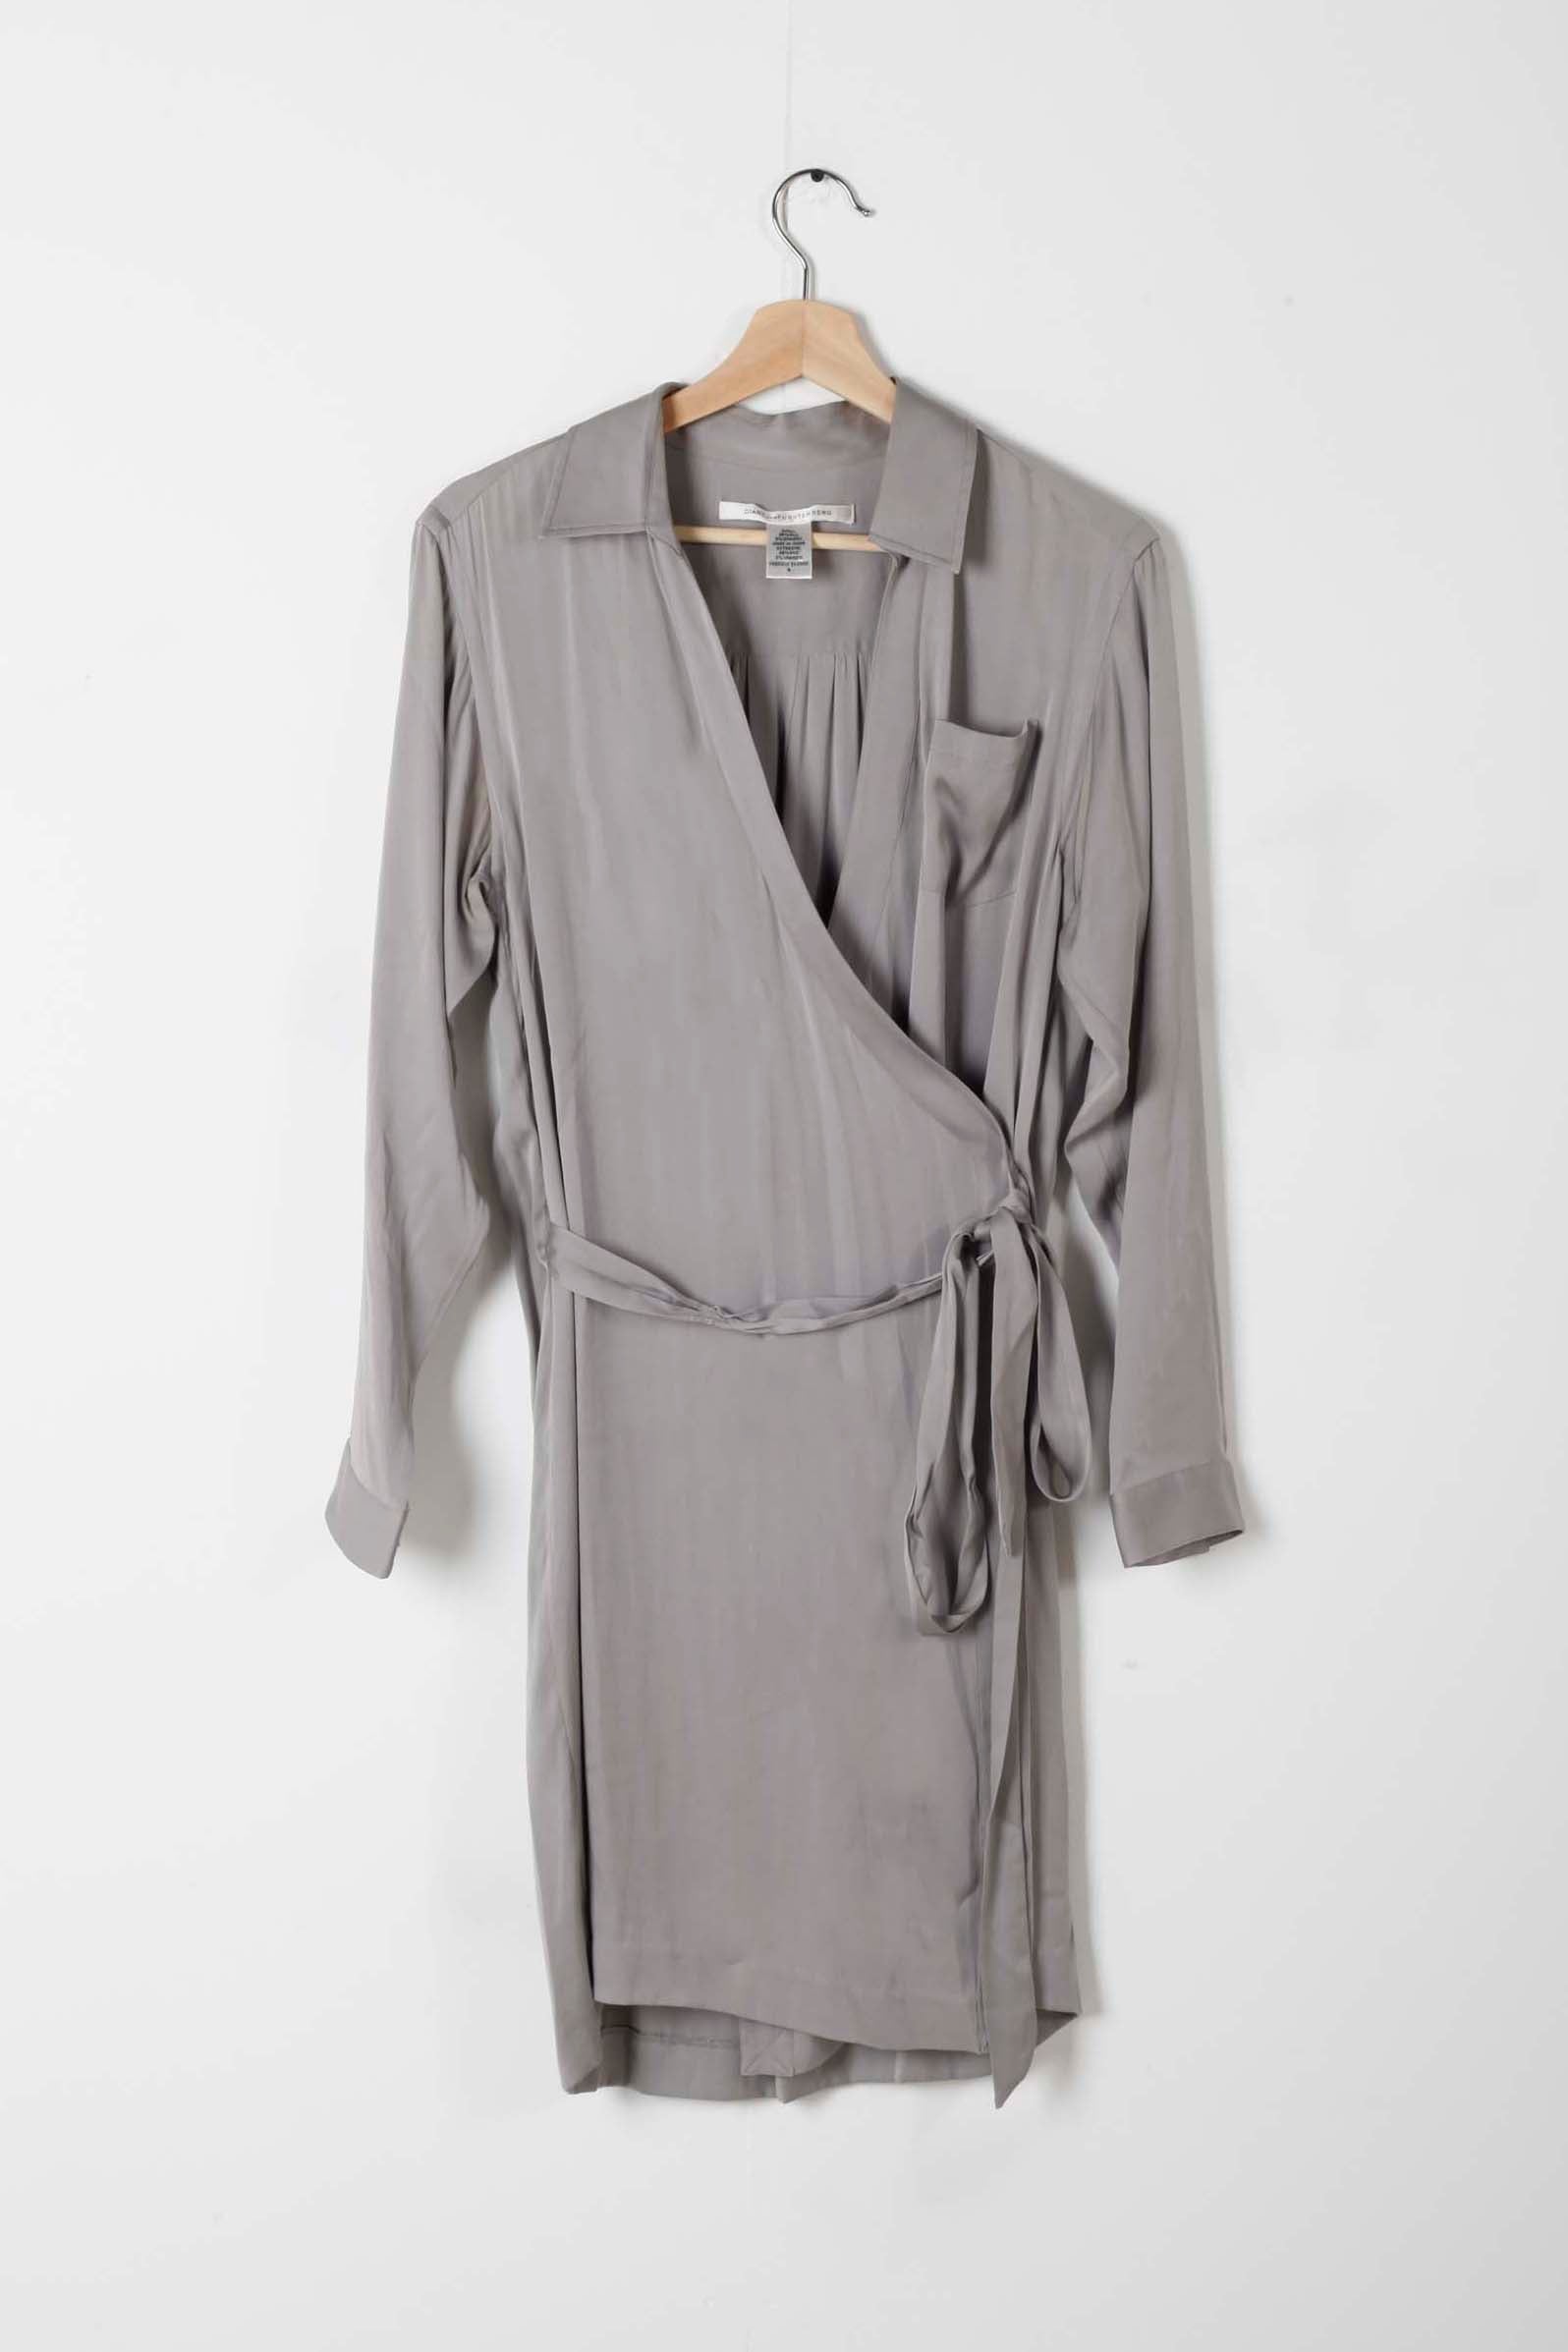 Silver/Grey DVF Wrap Dress (Eu38)